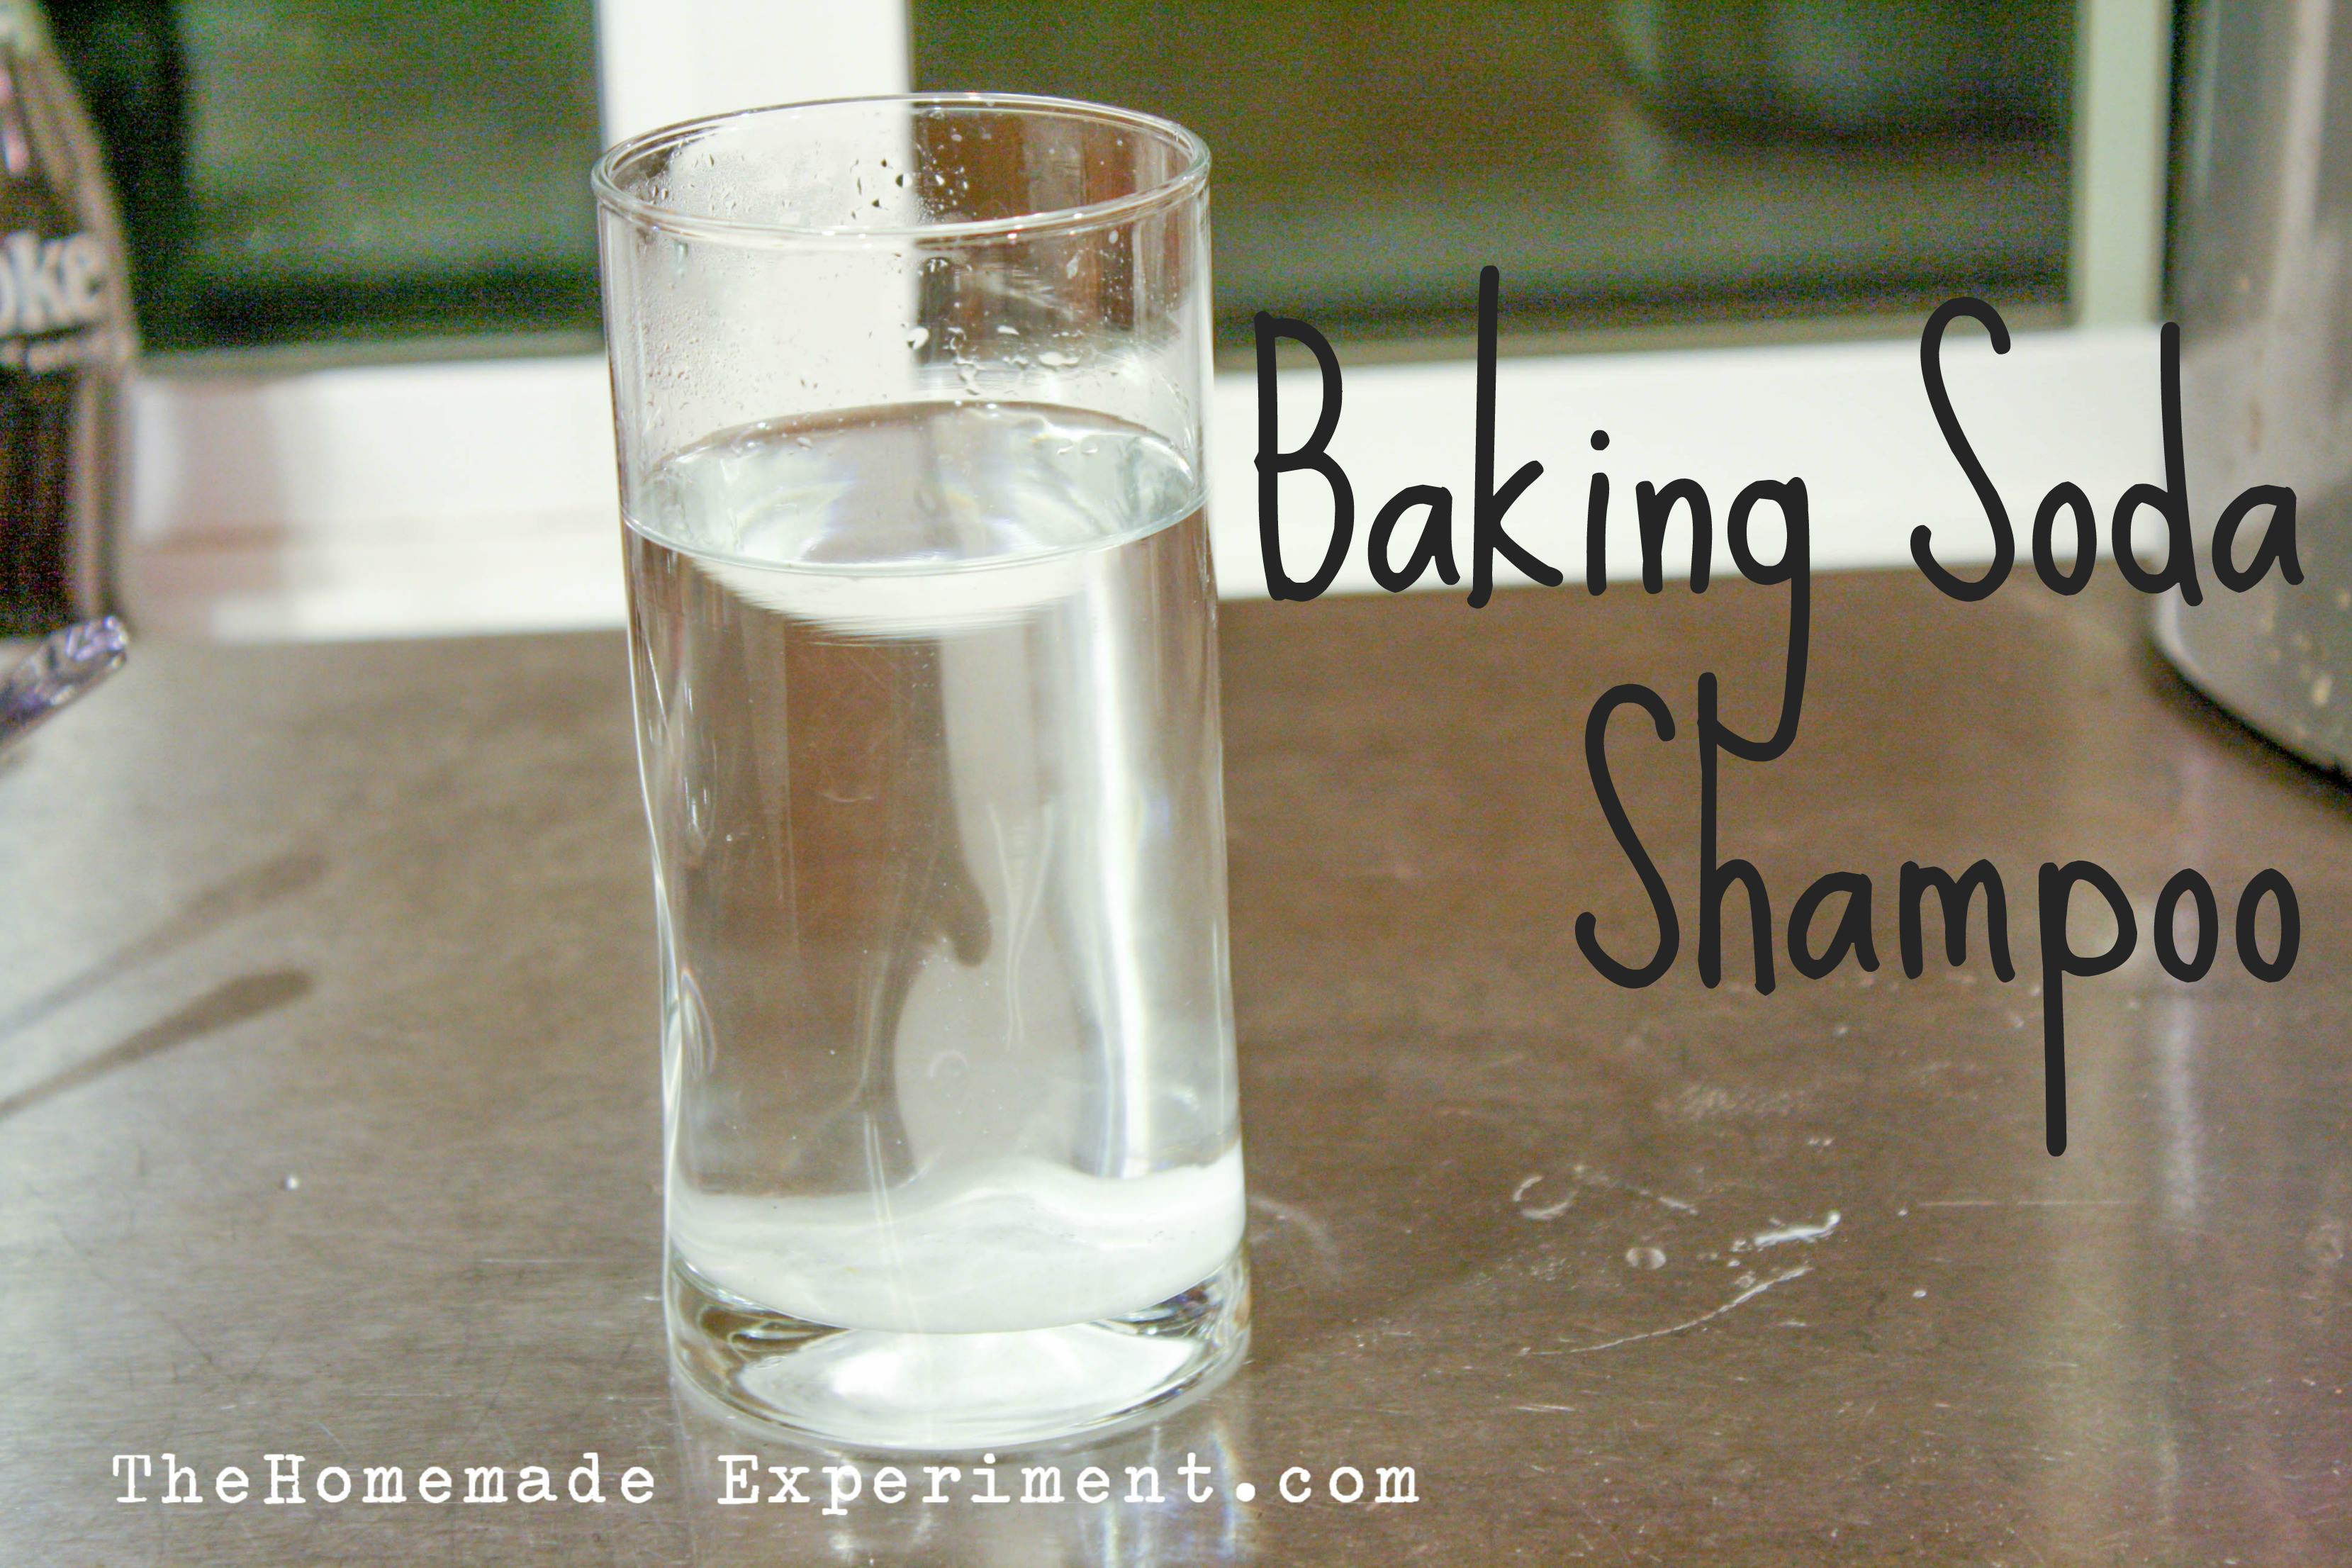 Baking-Soda-Shampoo-Title